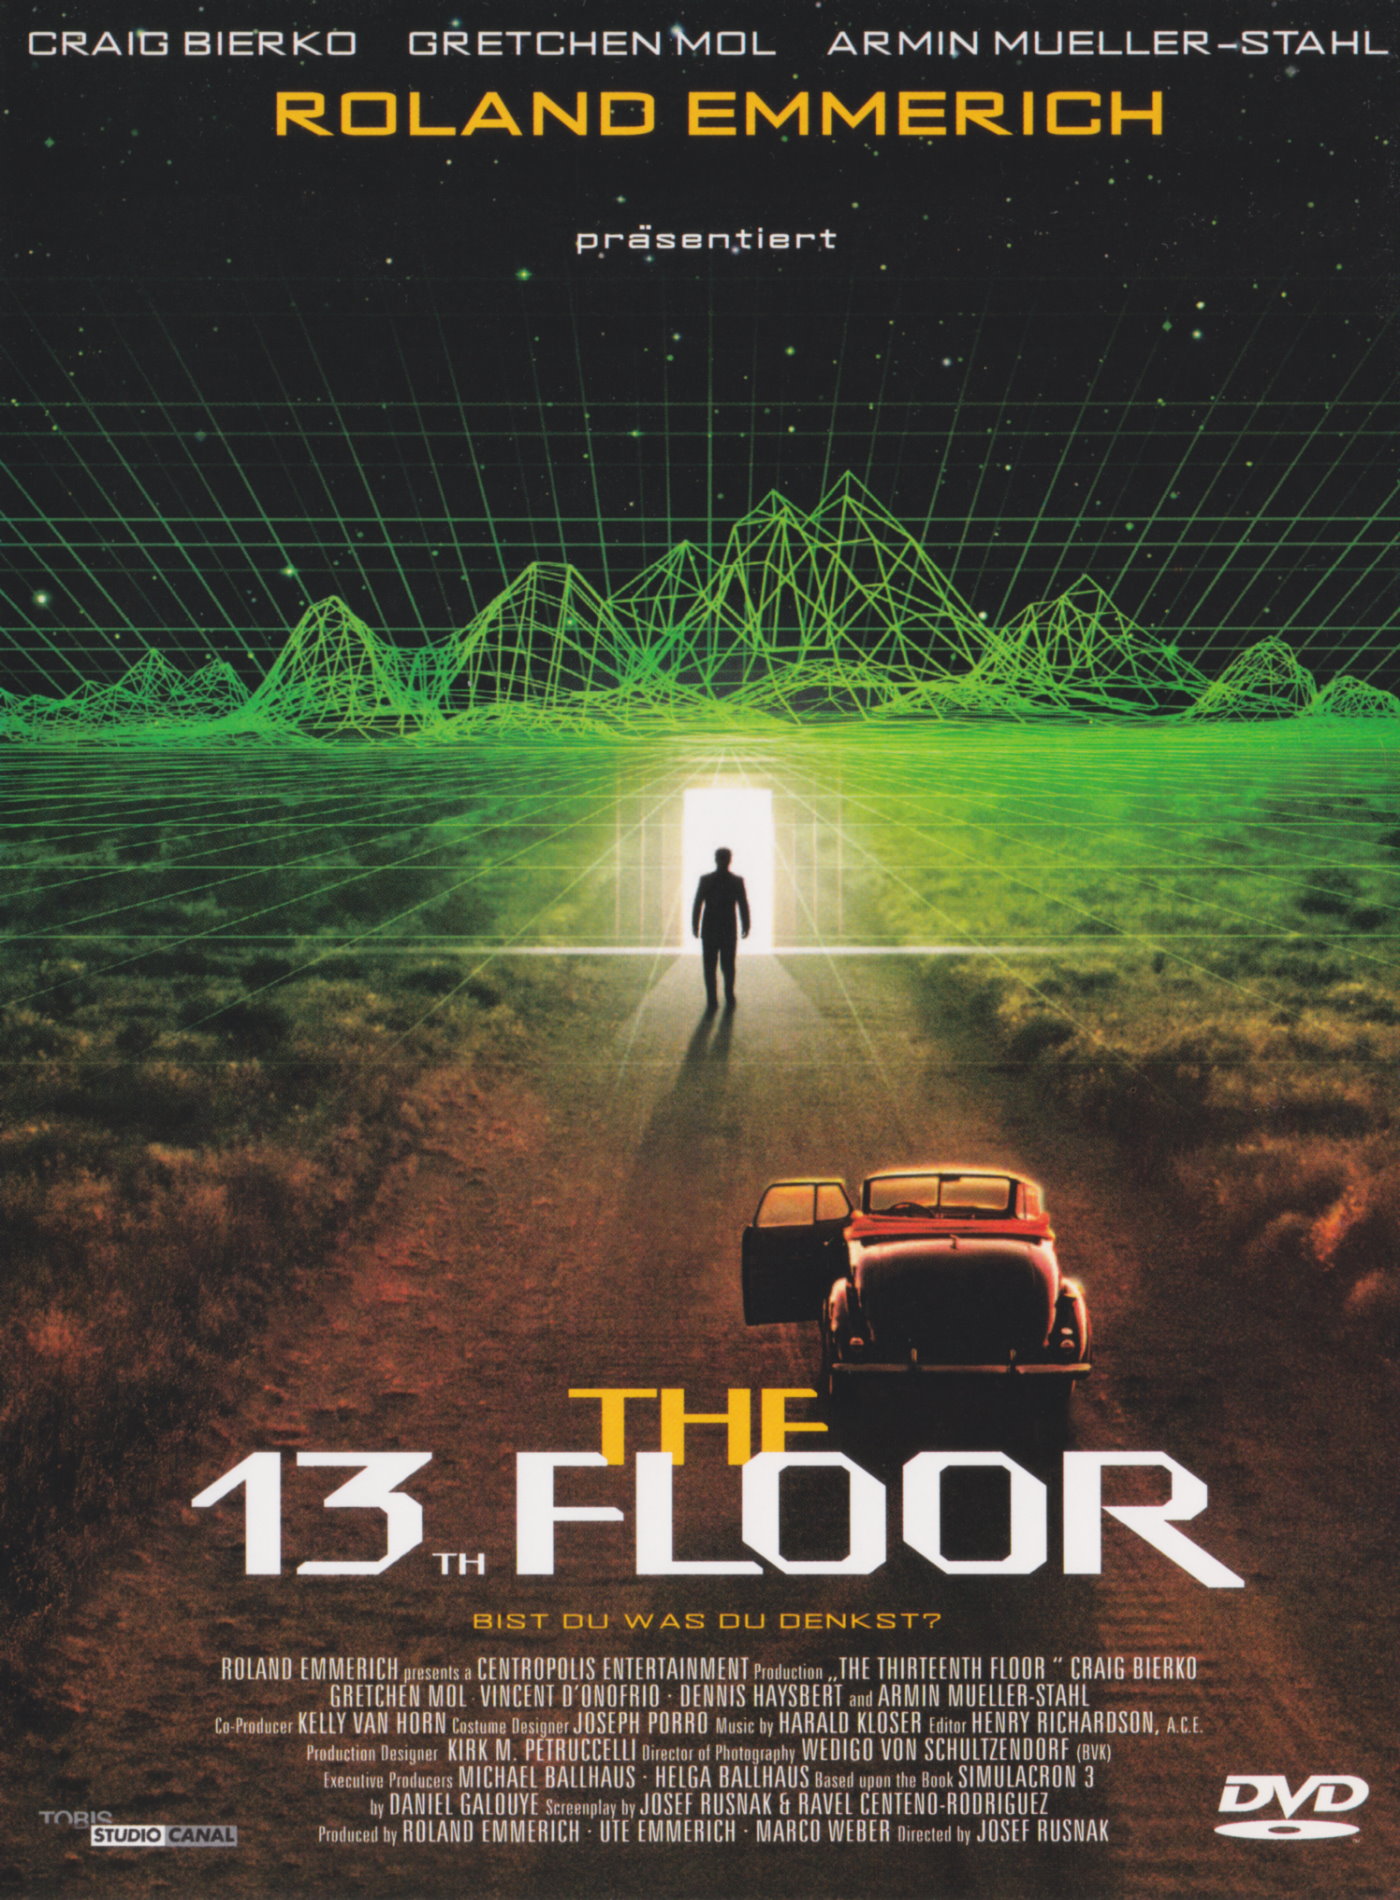 Cover - The 13th Floor.jpg